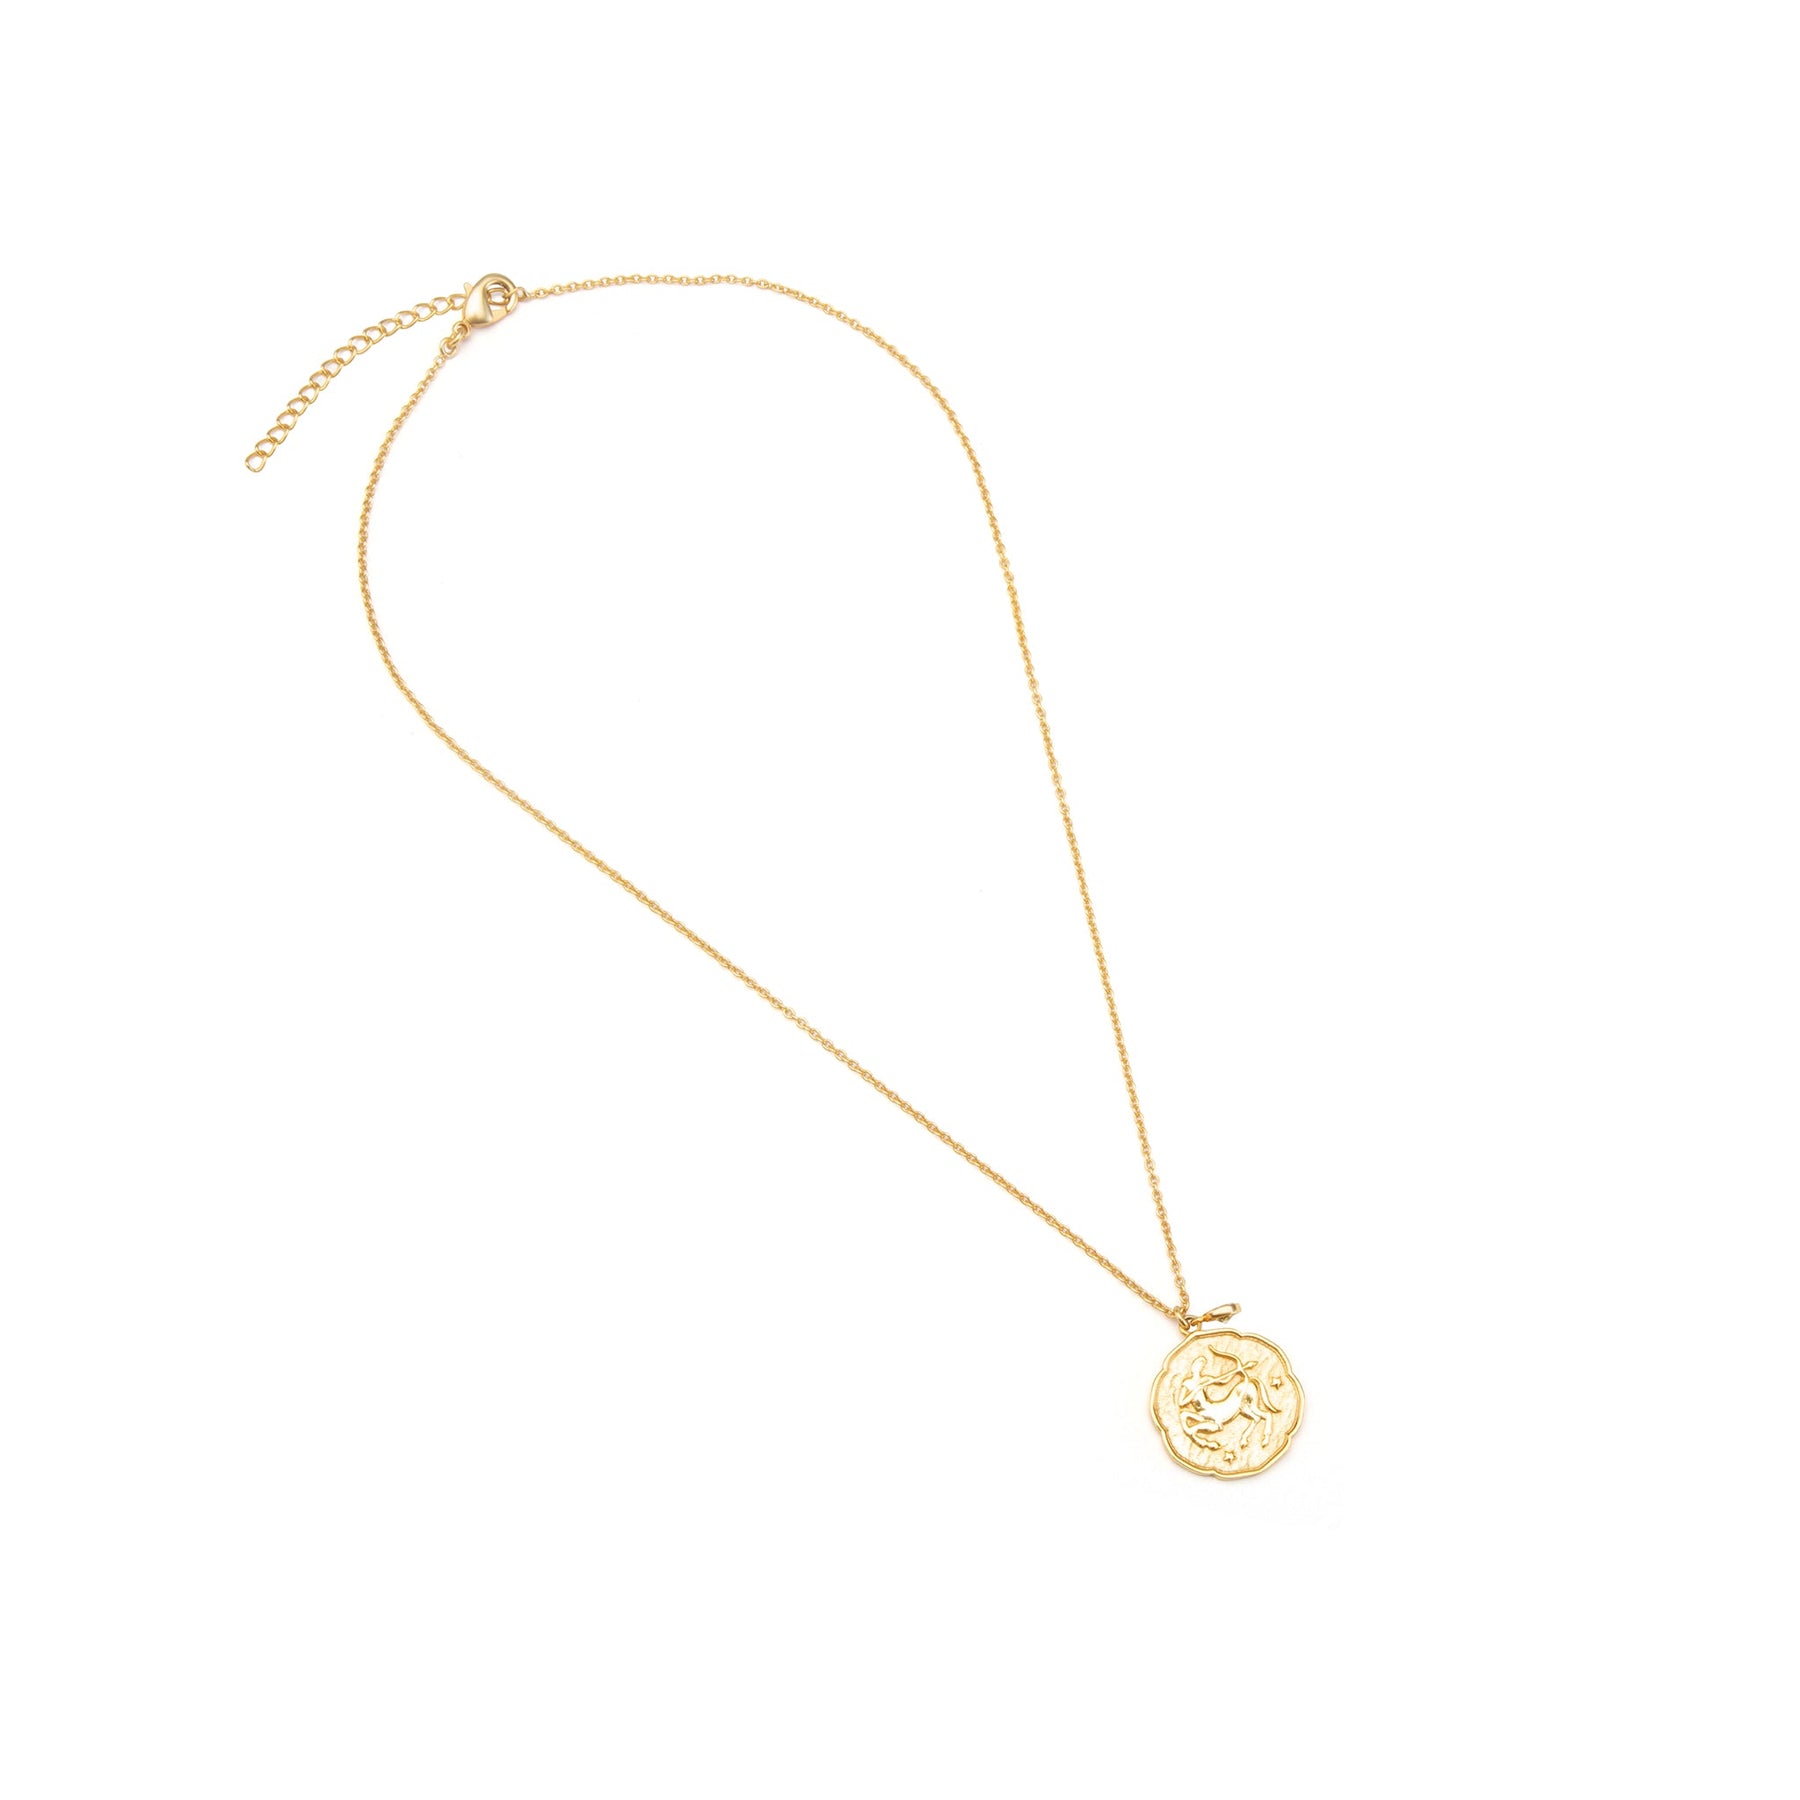 Sagittarius Necklace With Birth Stone Charm